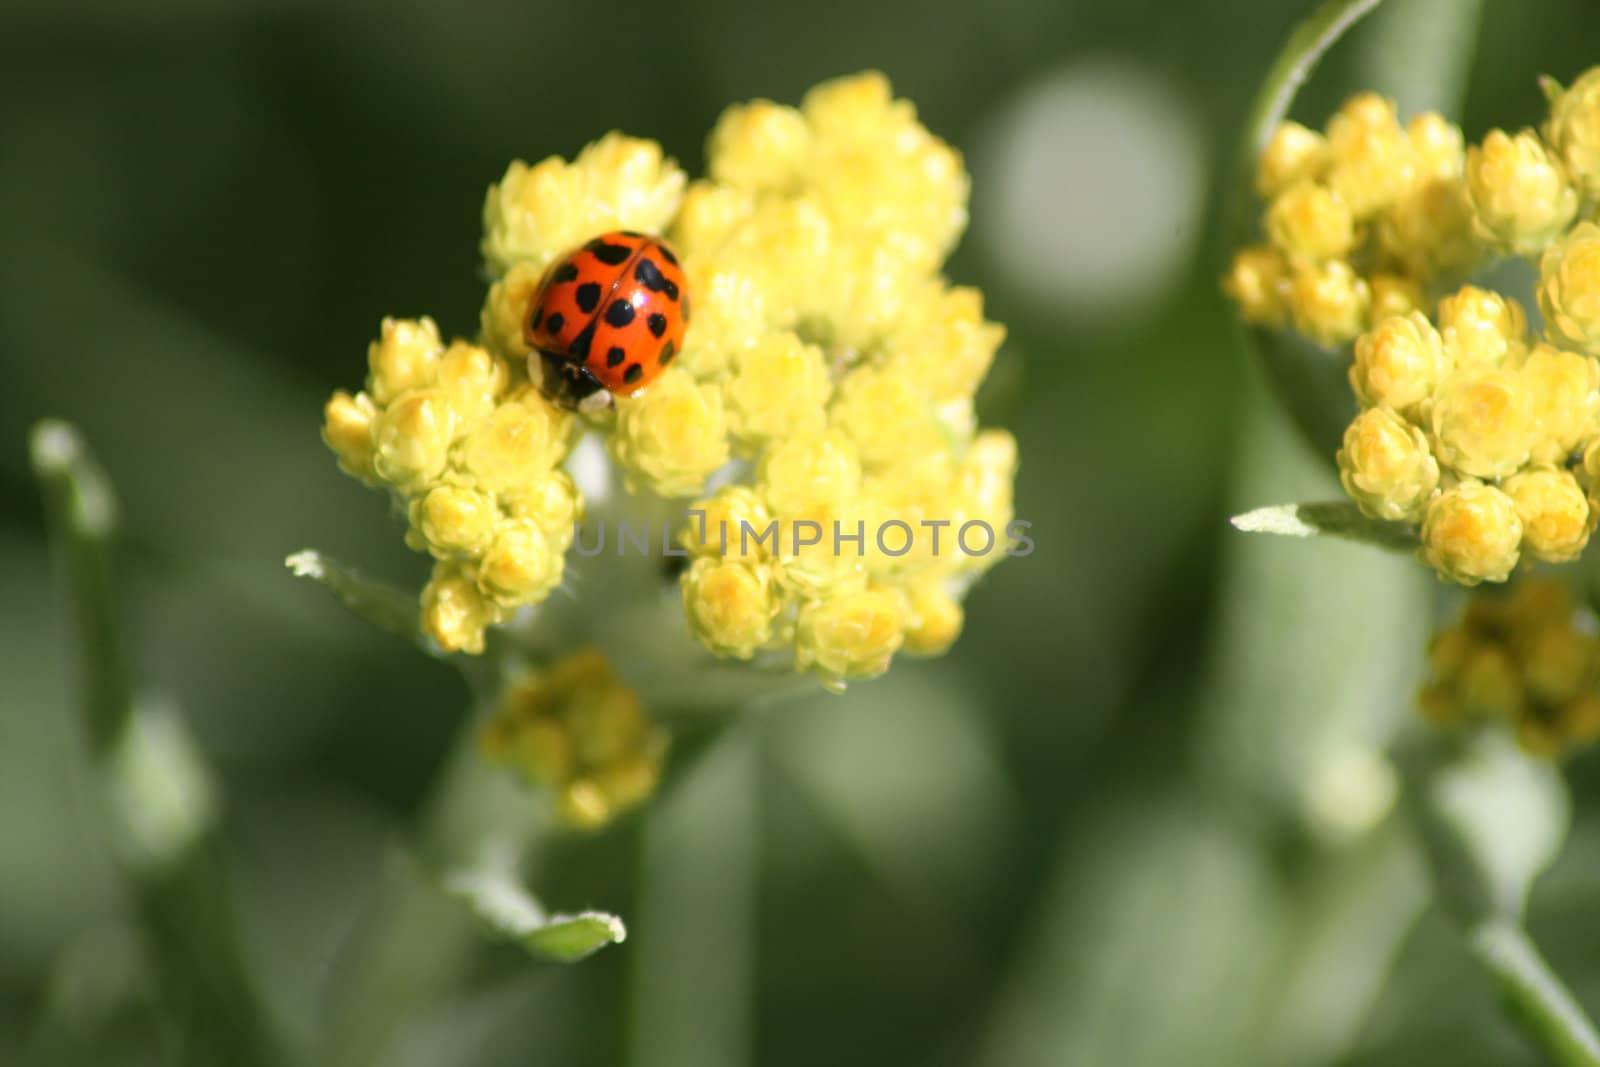 A Harmonia axyridis (Harlequin lady beetle) on a yellow flower